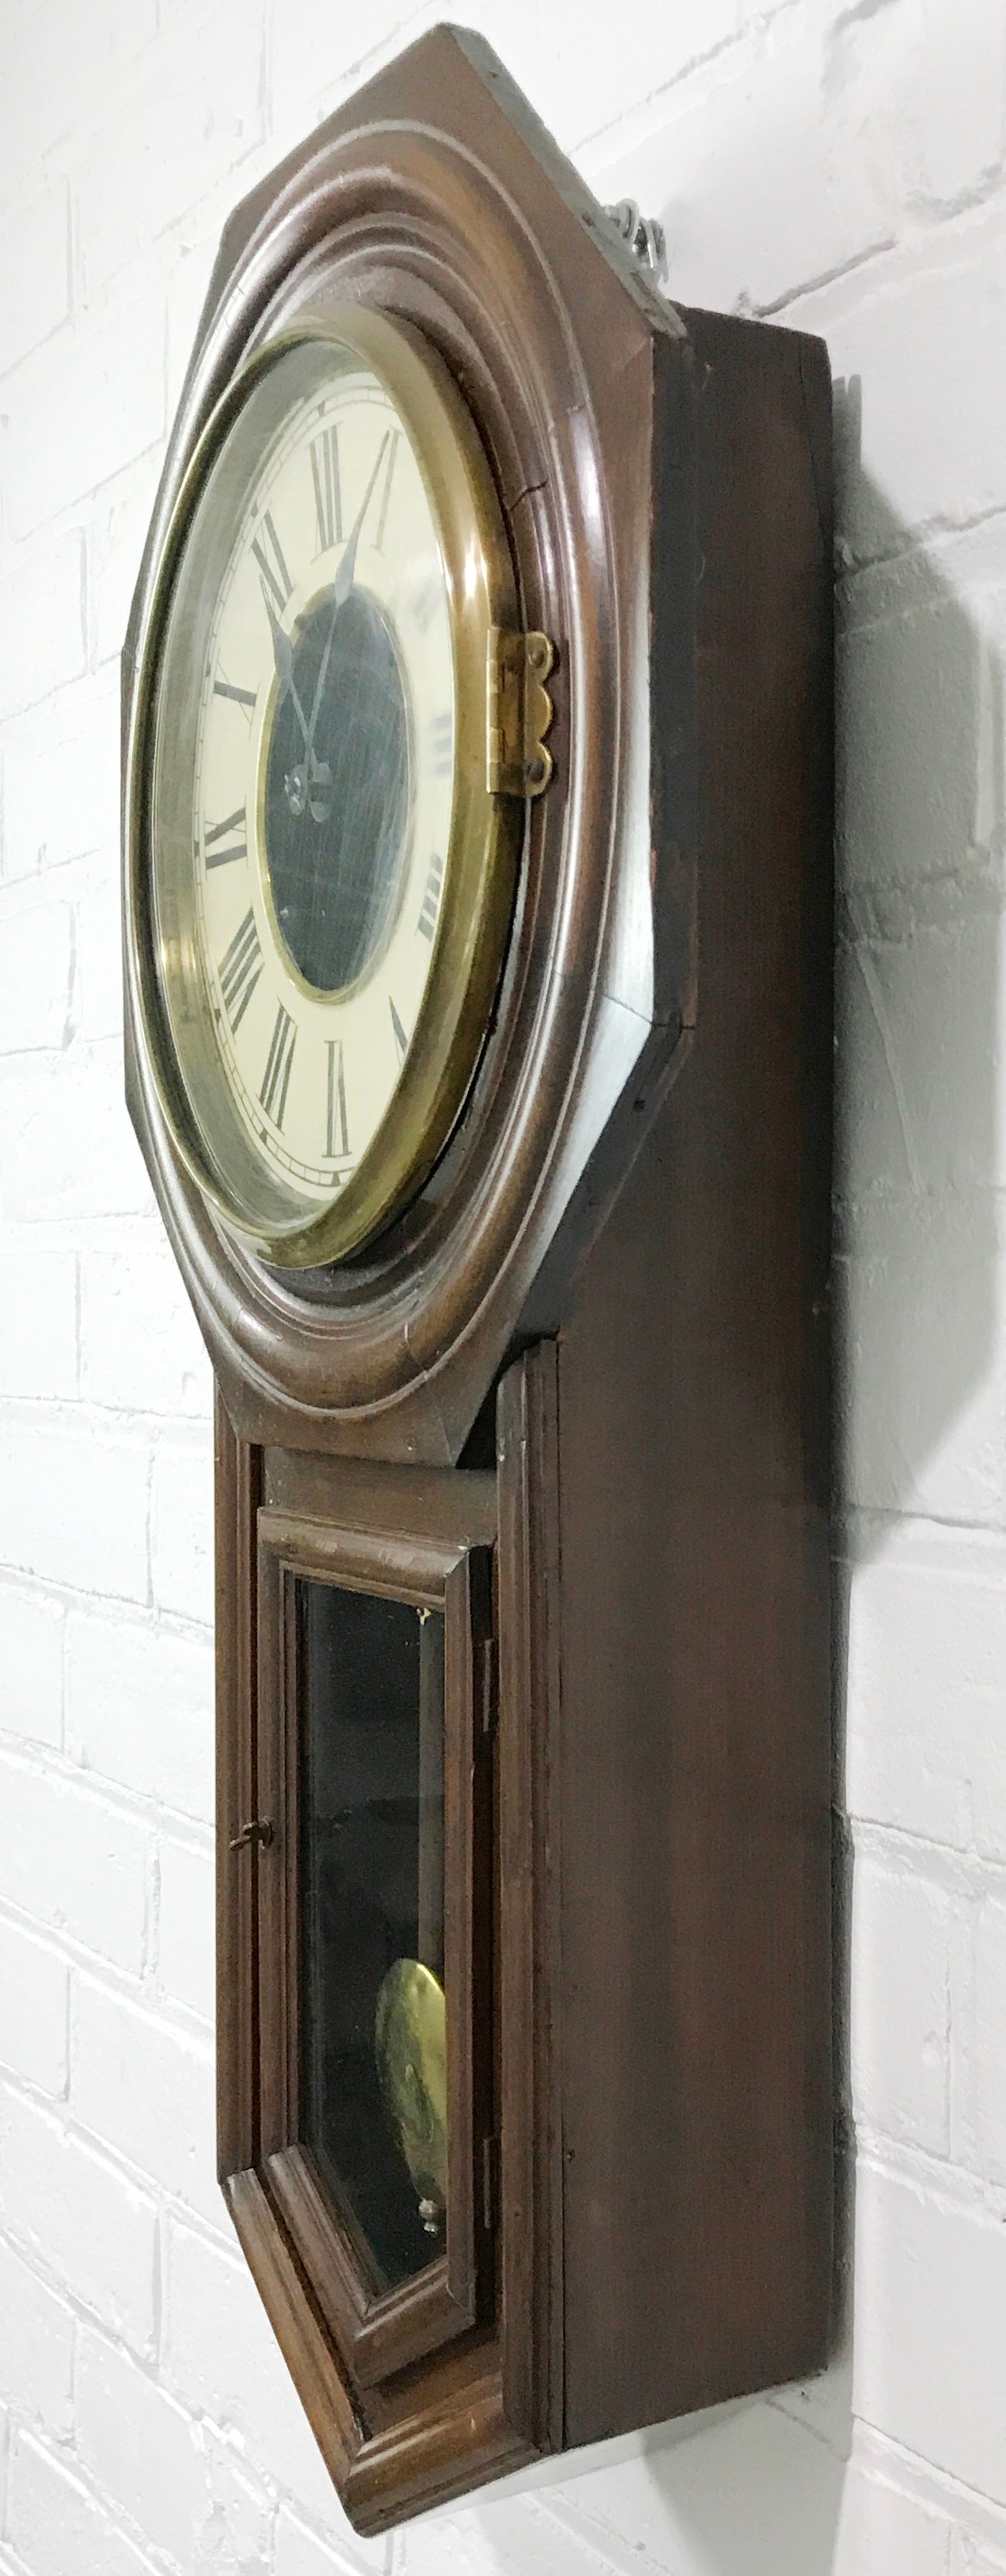 Vintage SEIKOSHA Wall Clock | eXibit collection